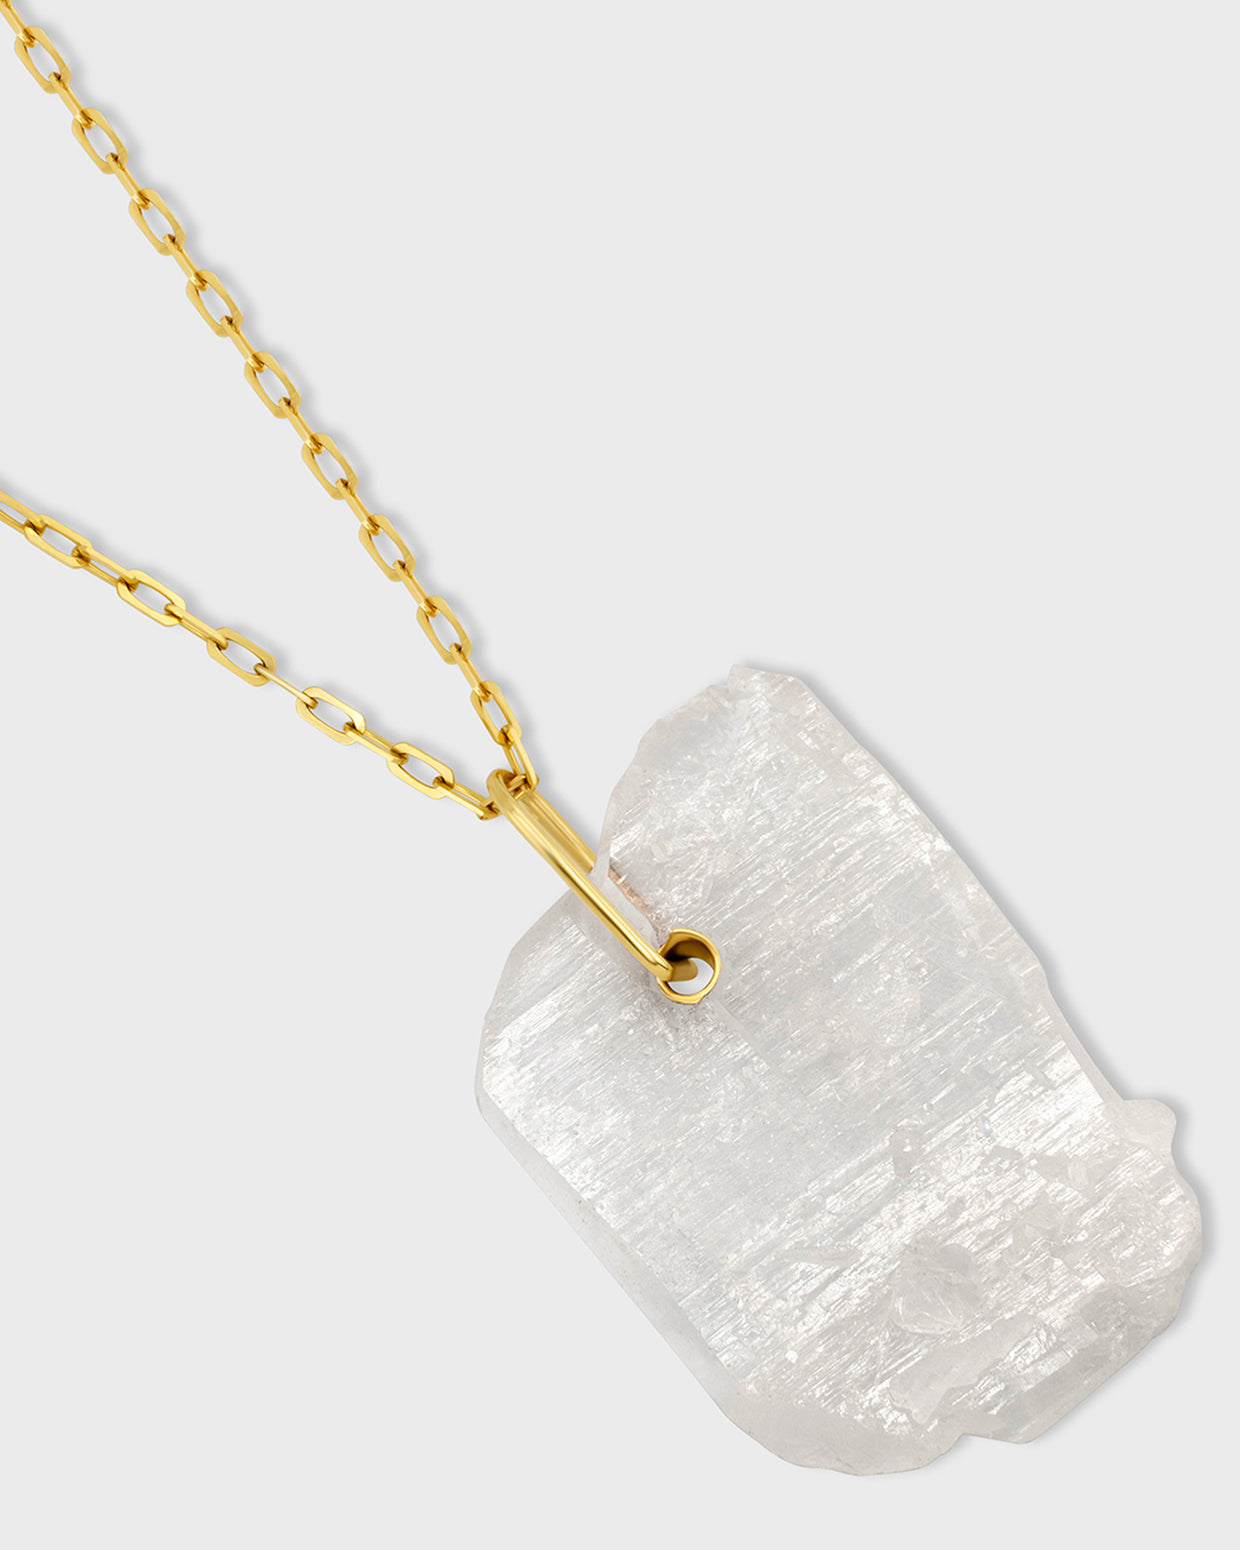 Crystalline Tag Crystal Quartz on Thin Chain Necklace